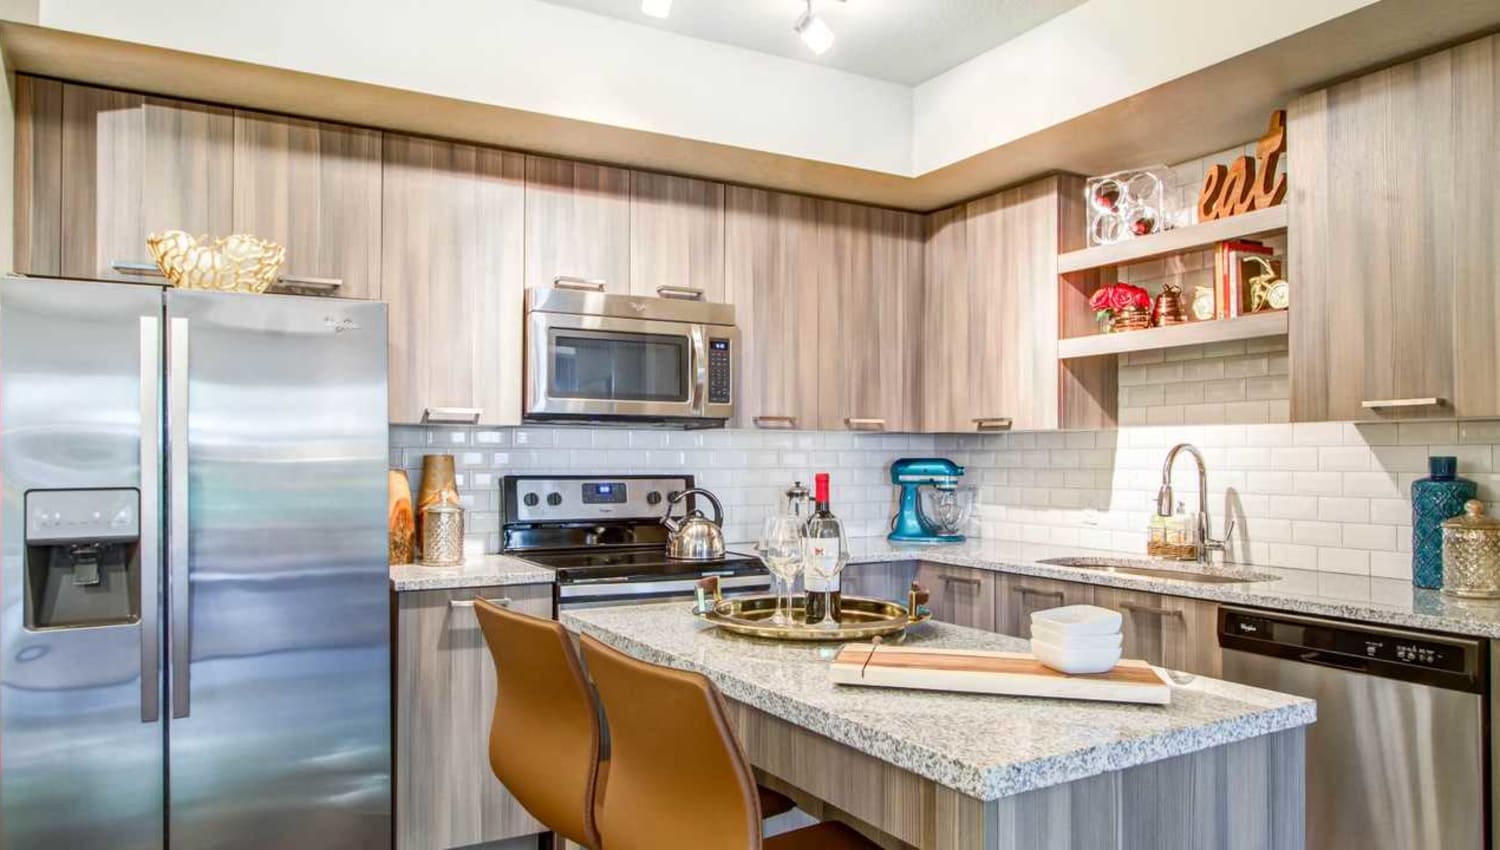 Modern kitchen with granite countertops, glass tile backsplash, and an island at Luzano in Pompano Beach, Florida